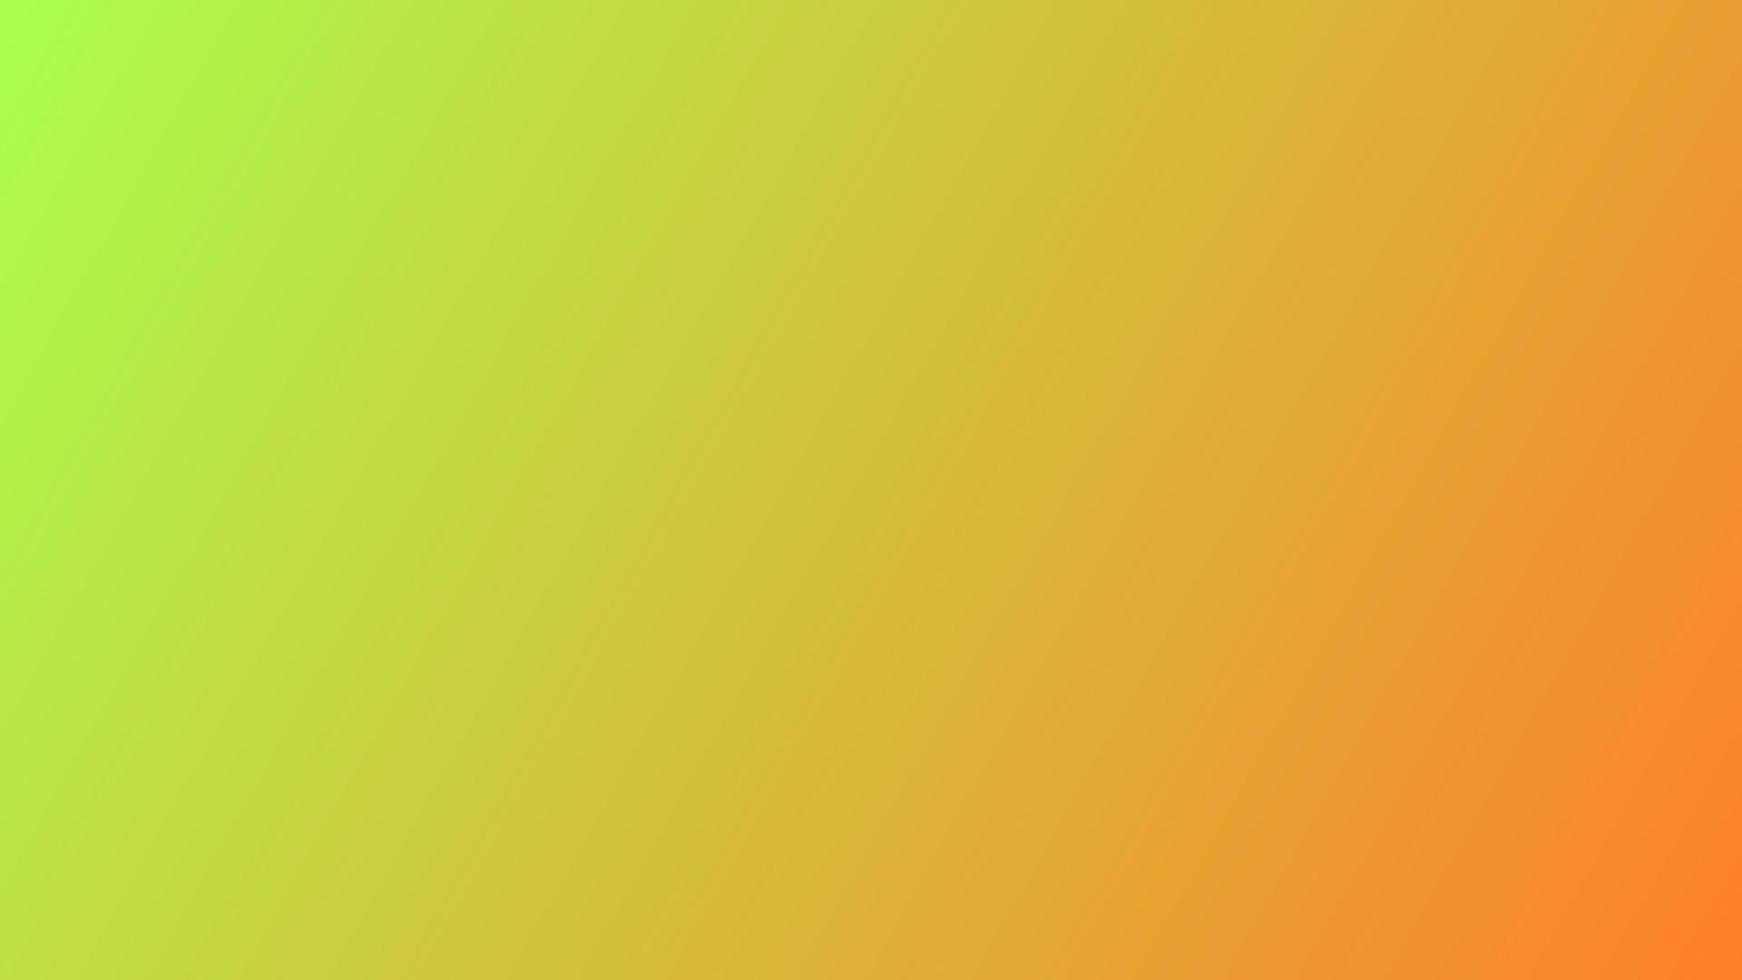 Abstract blurry vivid orange and light green gradient background. smooth modern horizontal design for mobile app, graphic design, banner, poster, landing page, webdesign, branding. vector illustration